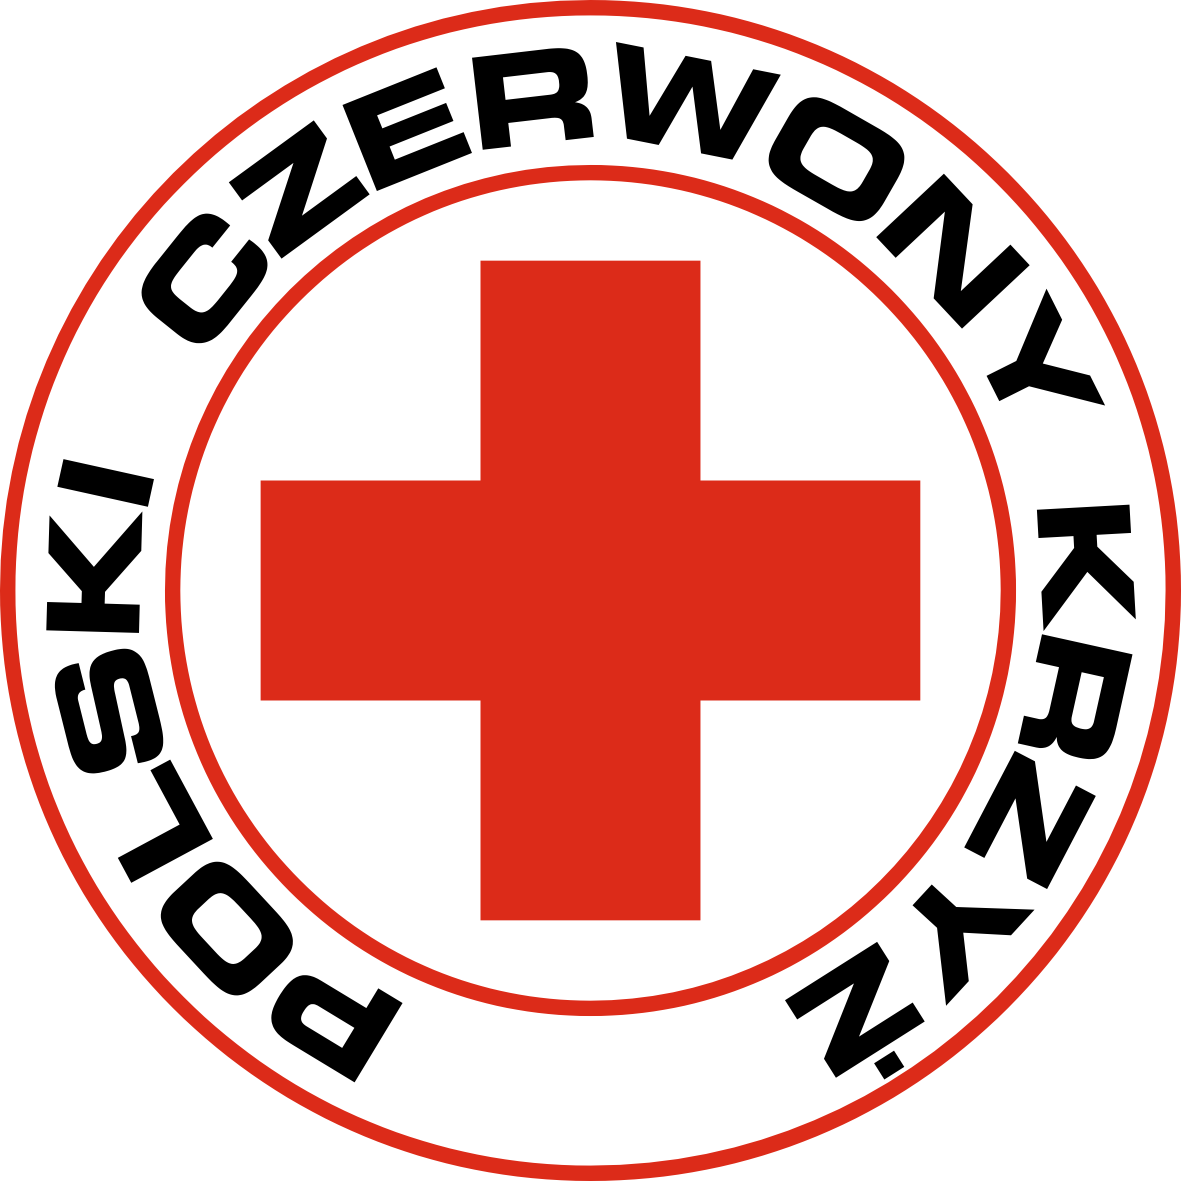 Logopck - Polish Red Cross, Hd Png Download